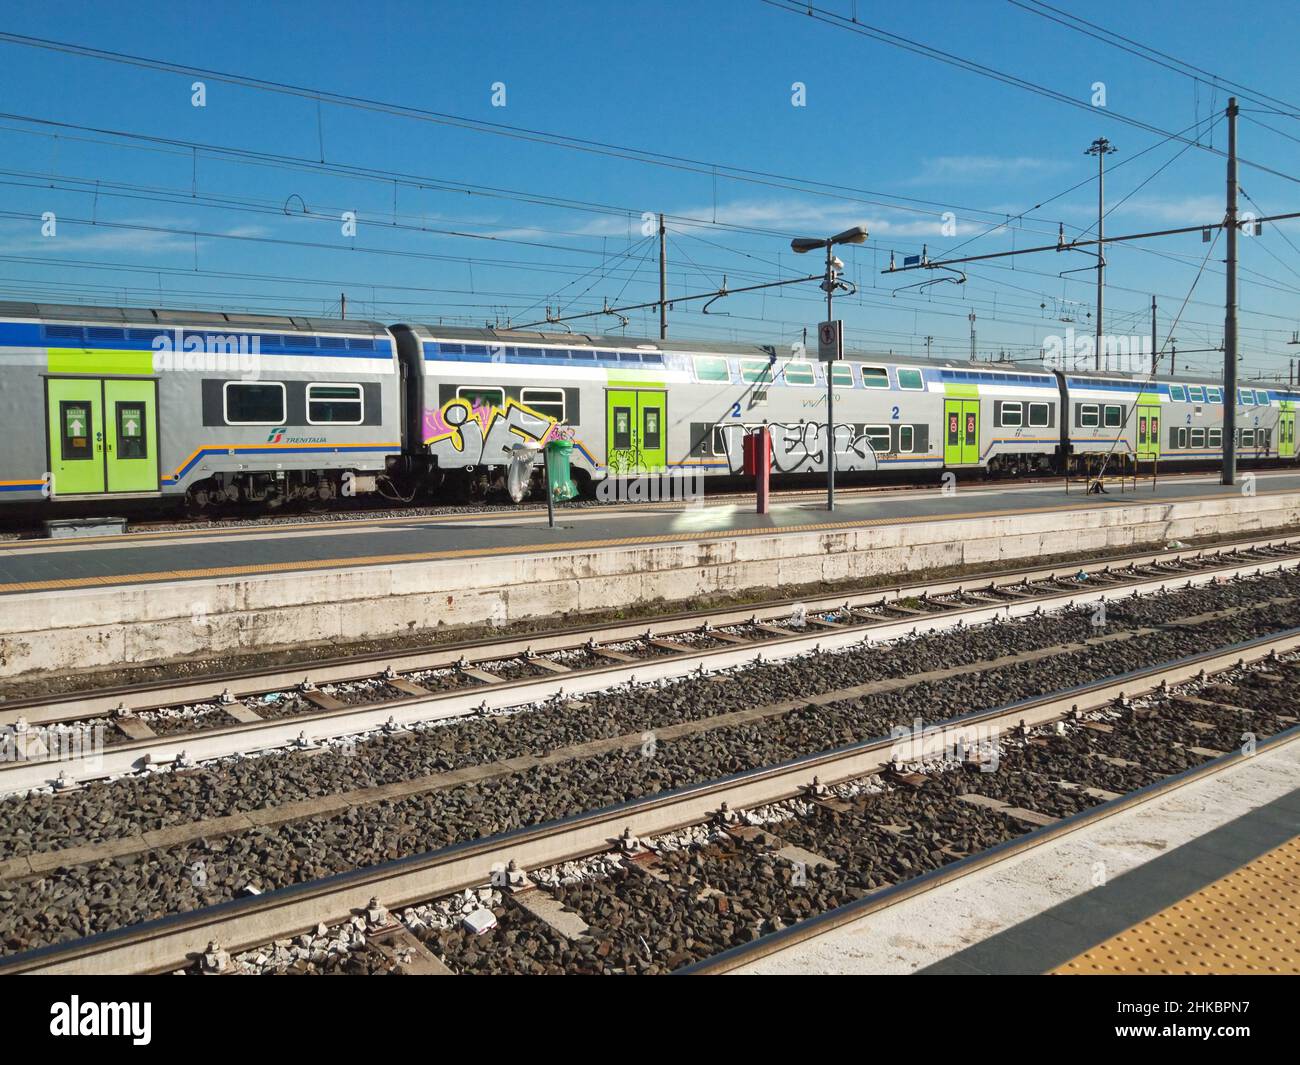 Train covered with some graffiti, leaving Roma Termini railway station. Stock Photo